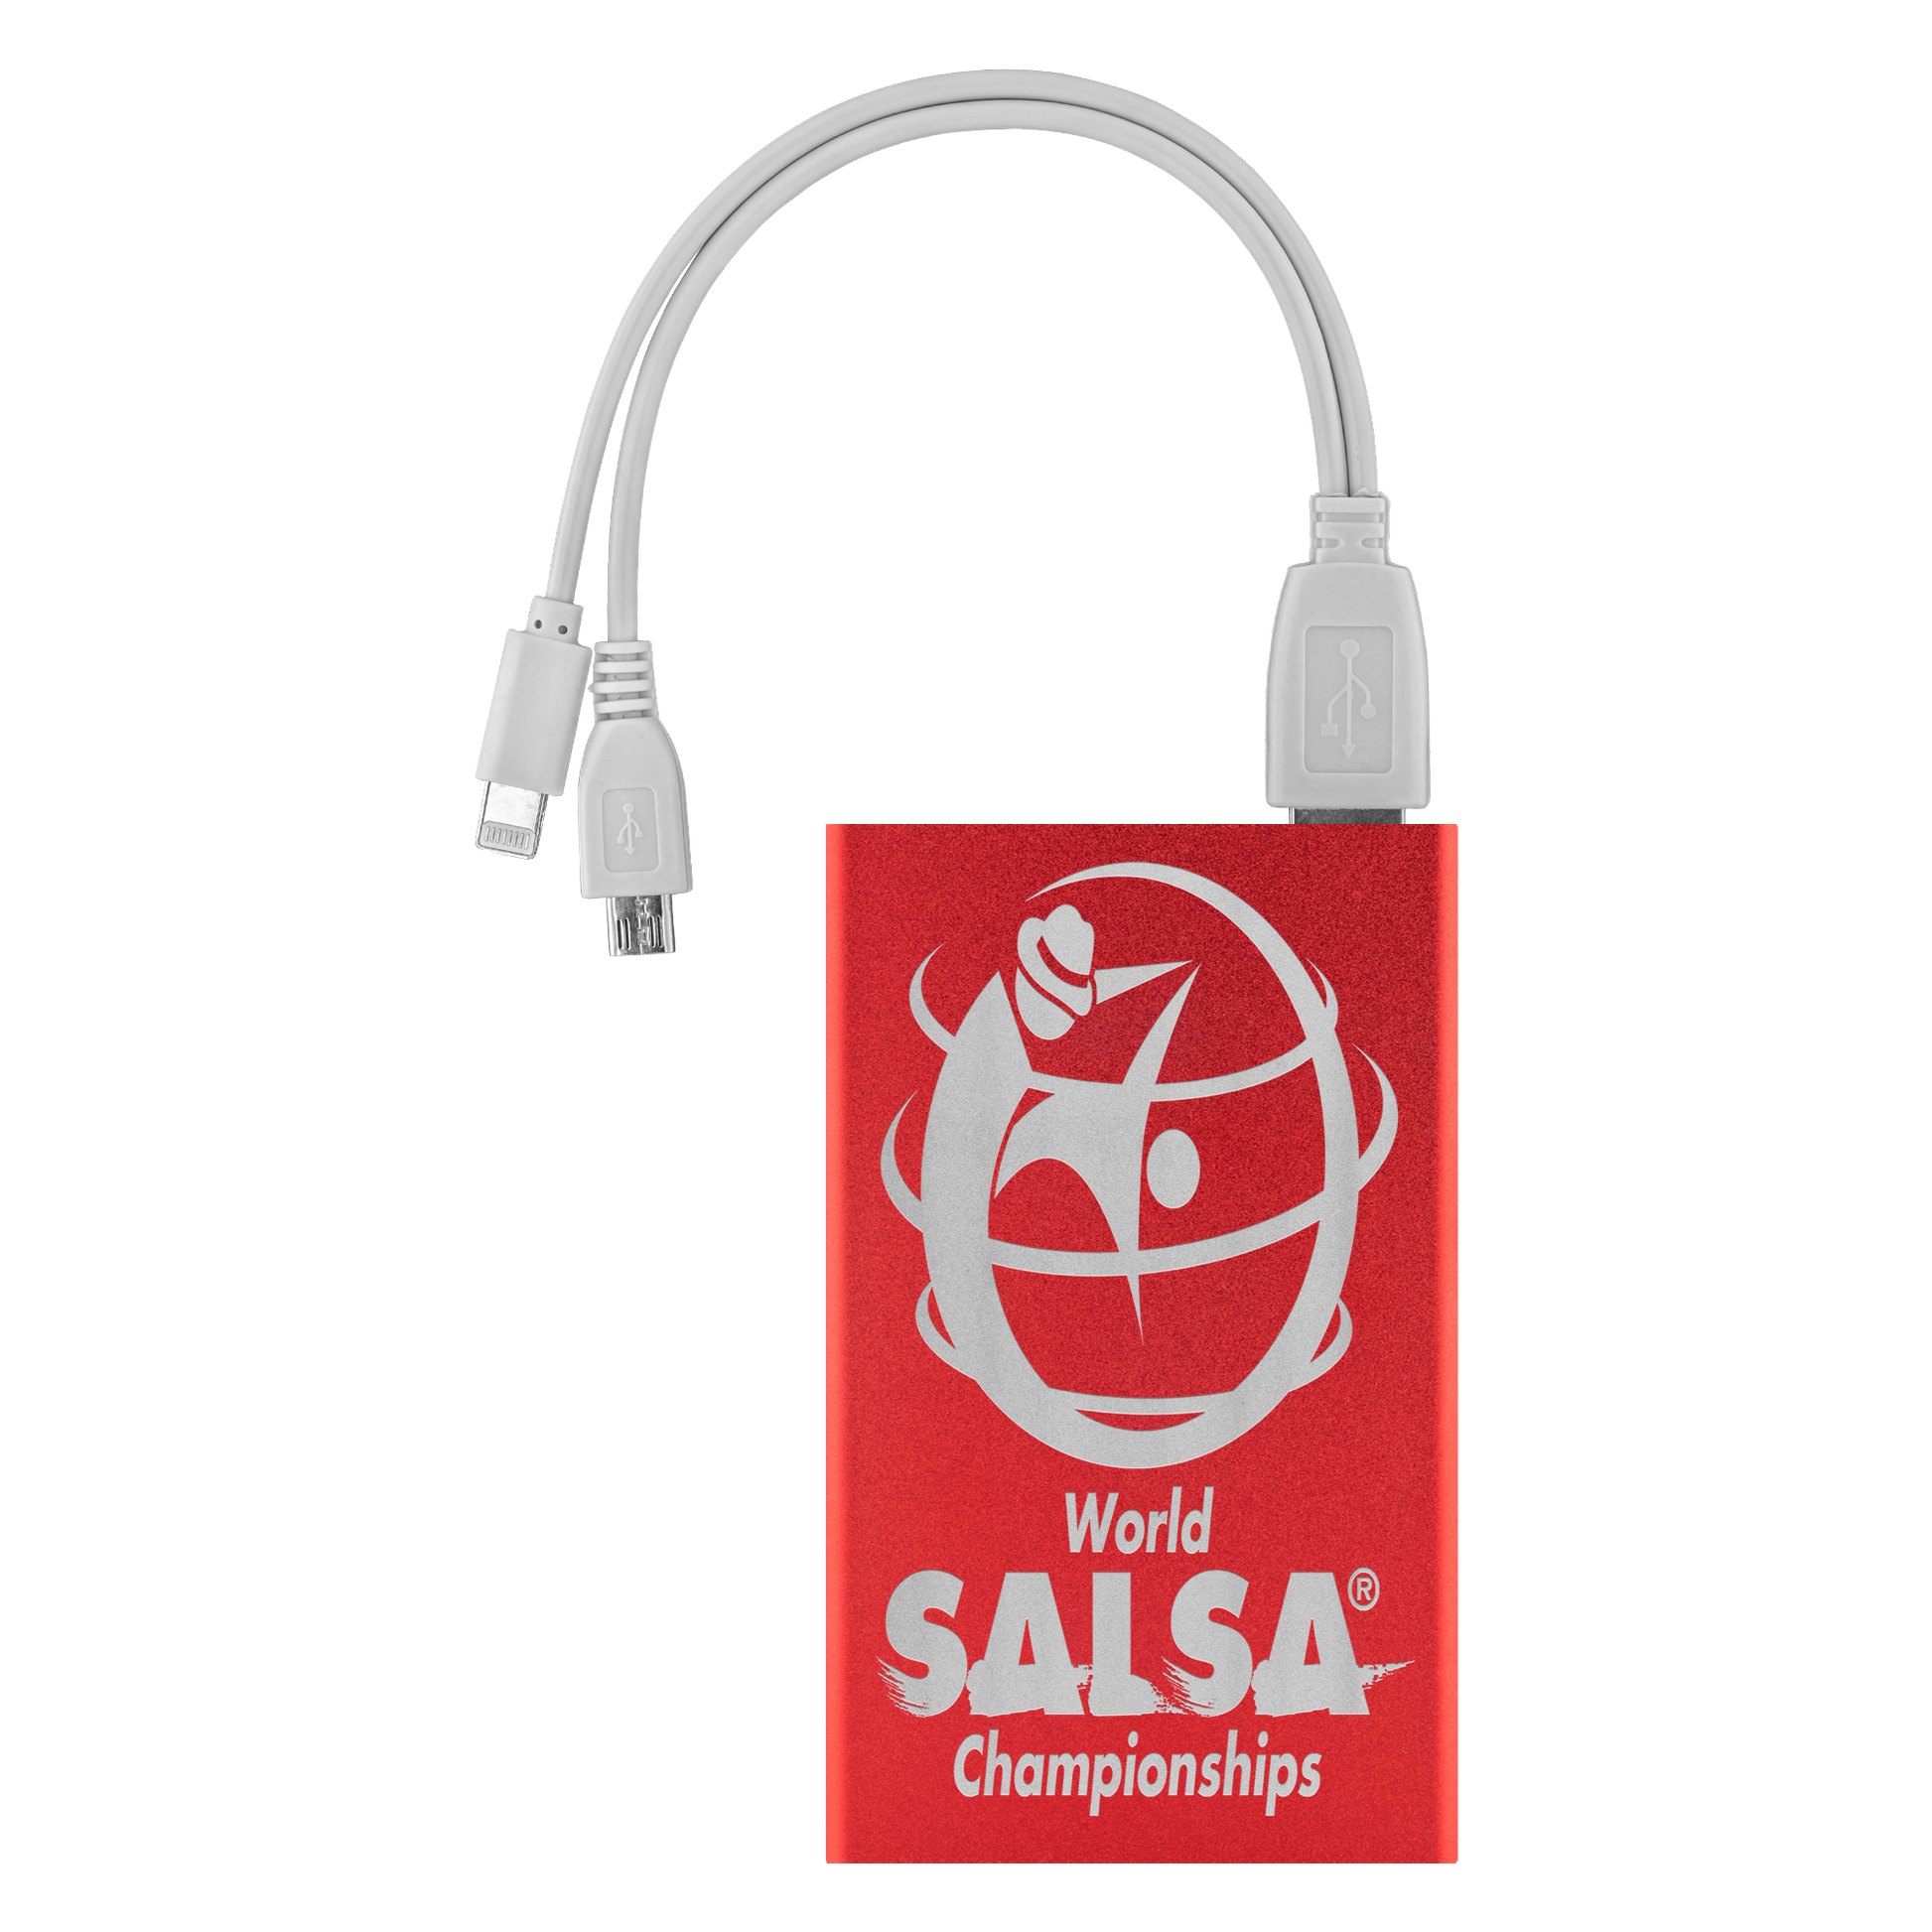 Official WSC Power Bank - World Salsa Championships